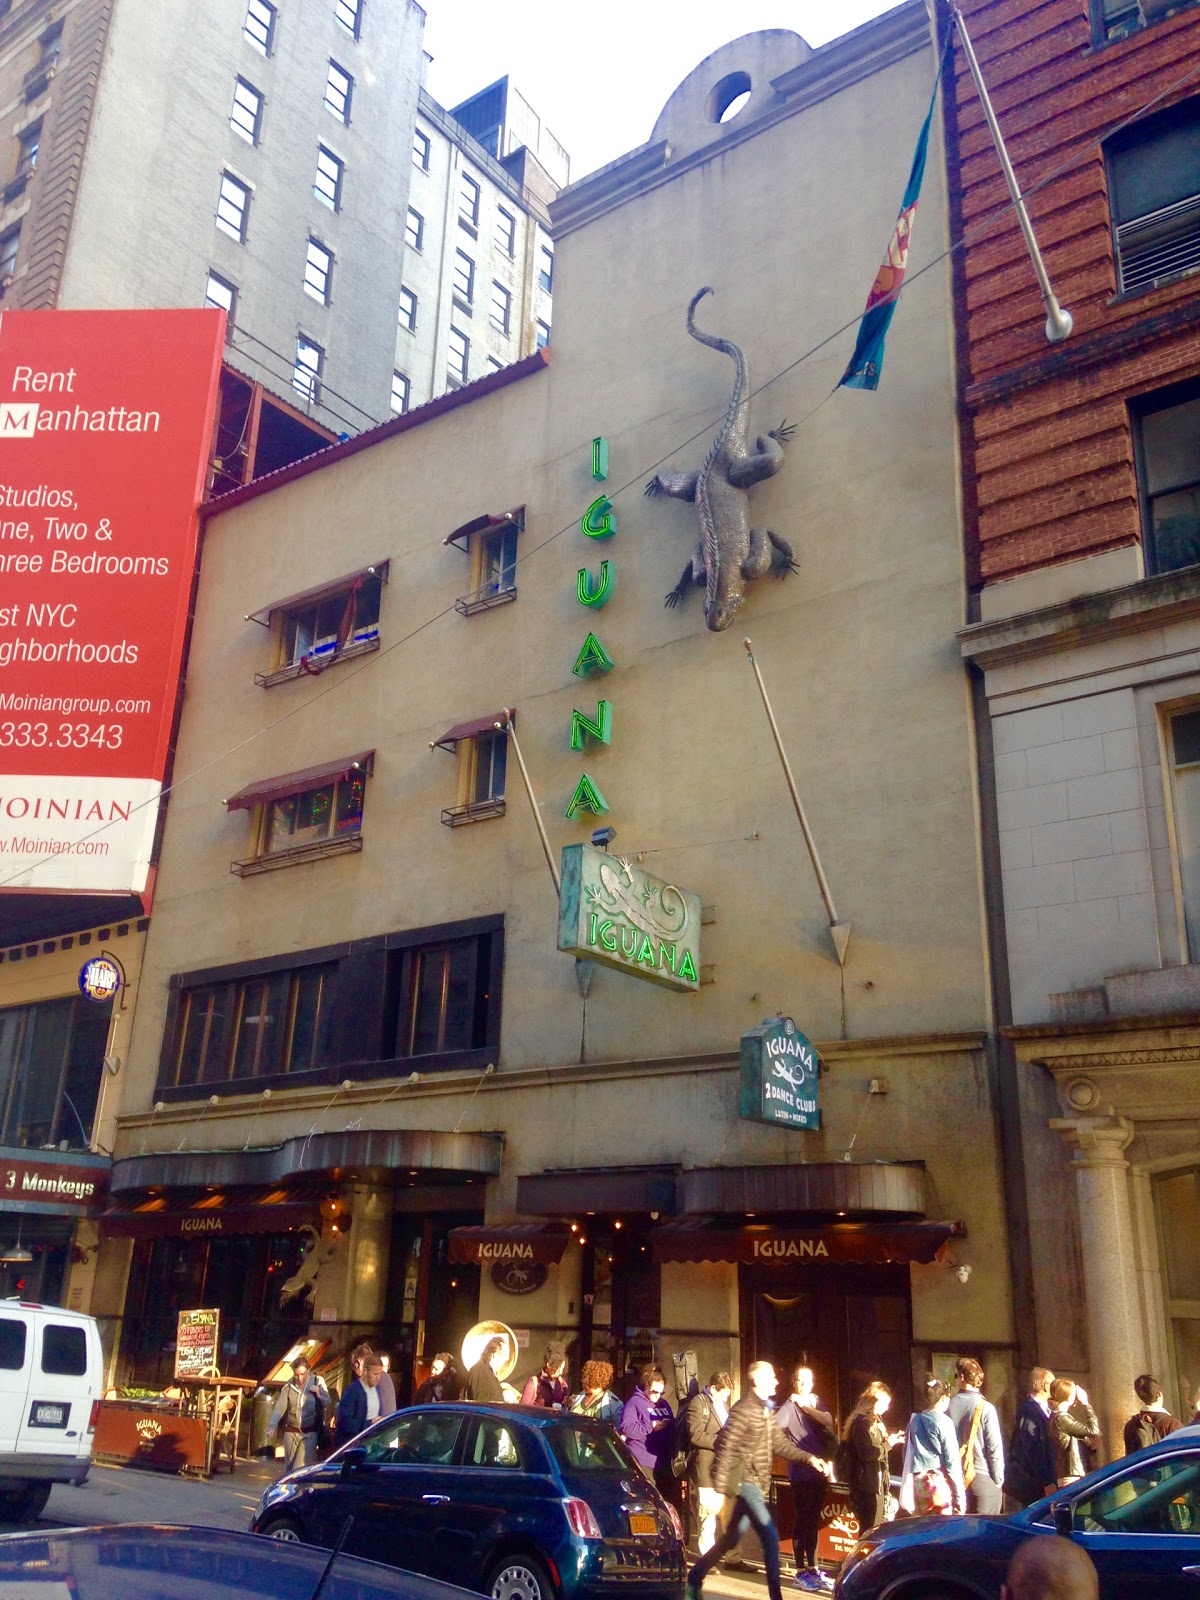 Photo of Iguana New York in New York City, New York, United States - 2 Picture of Restaurant, Food, Point of interest, Establishment, Bar, Night club